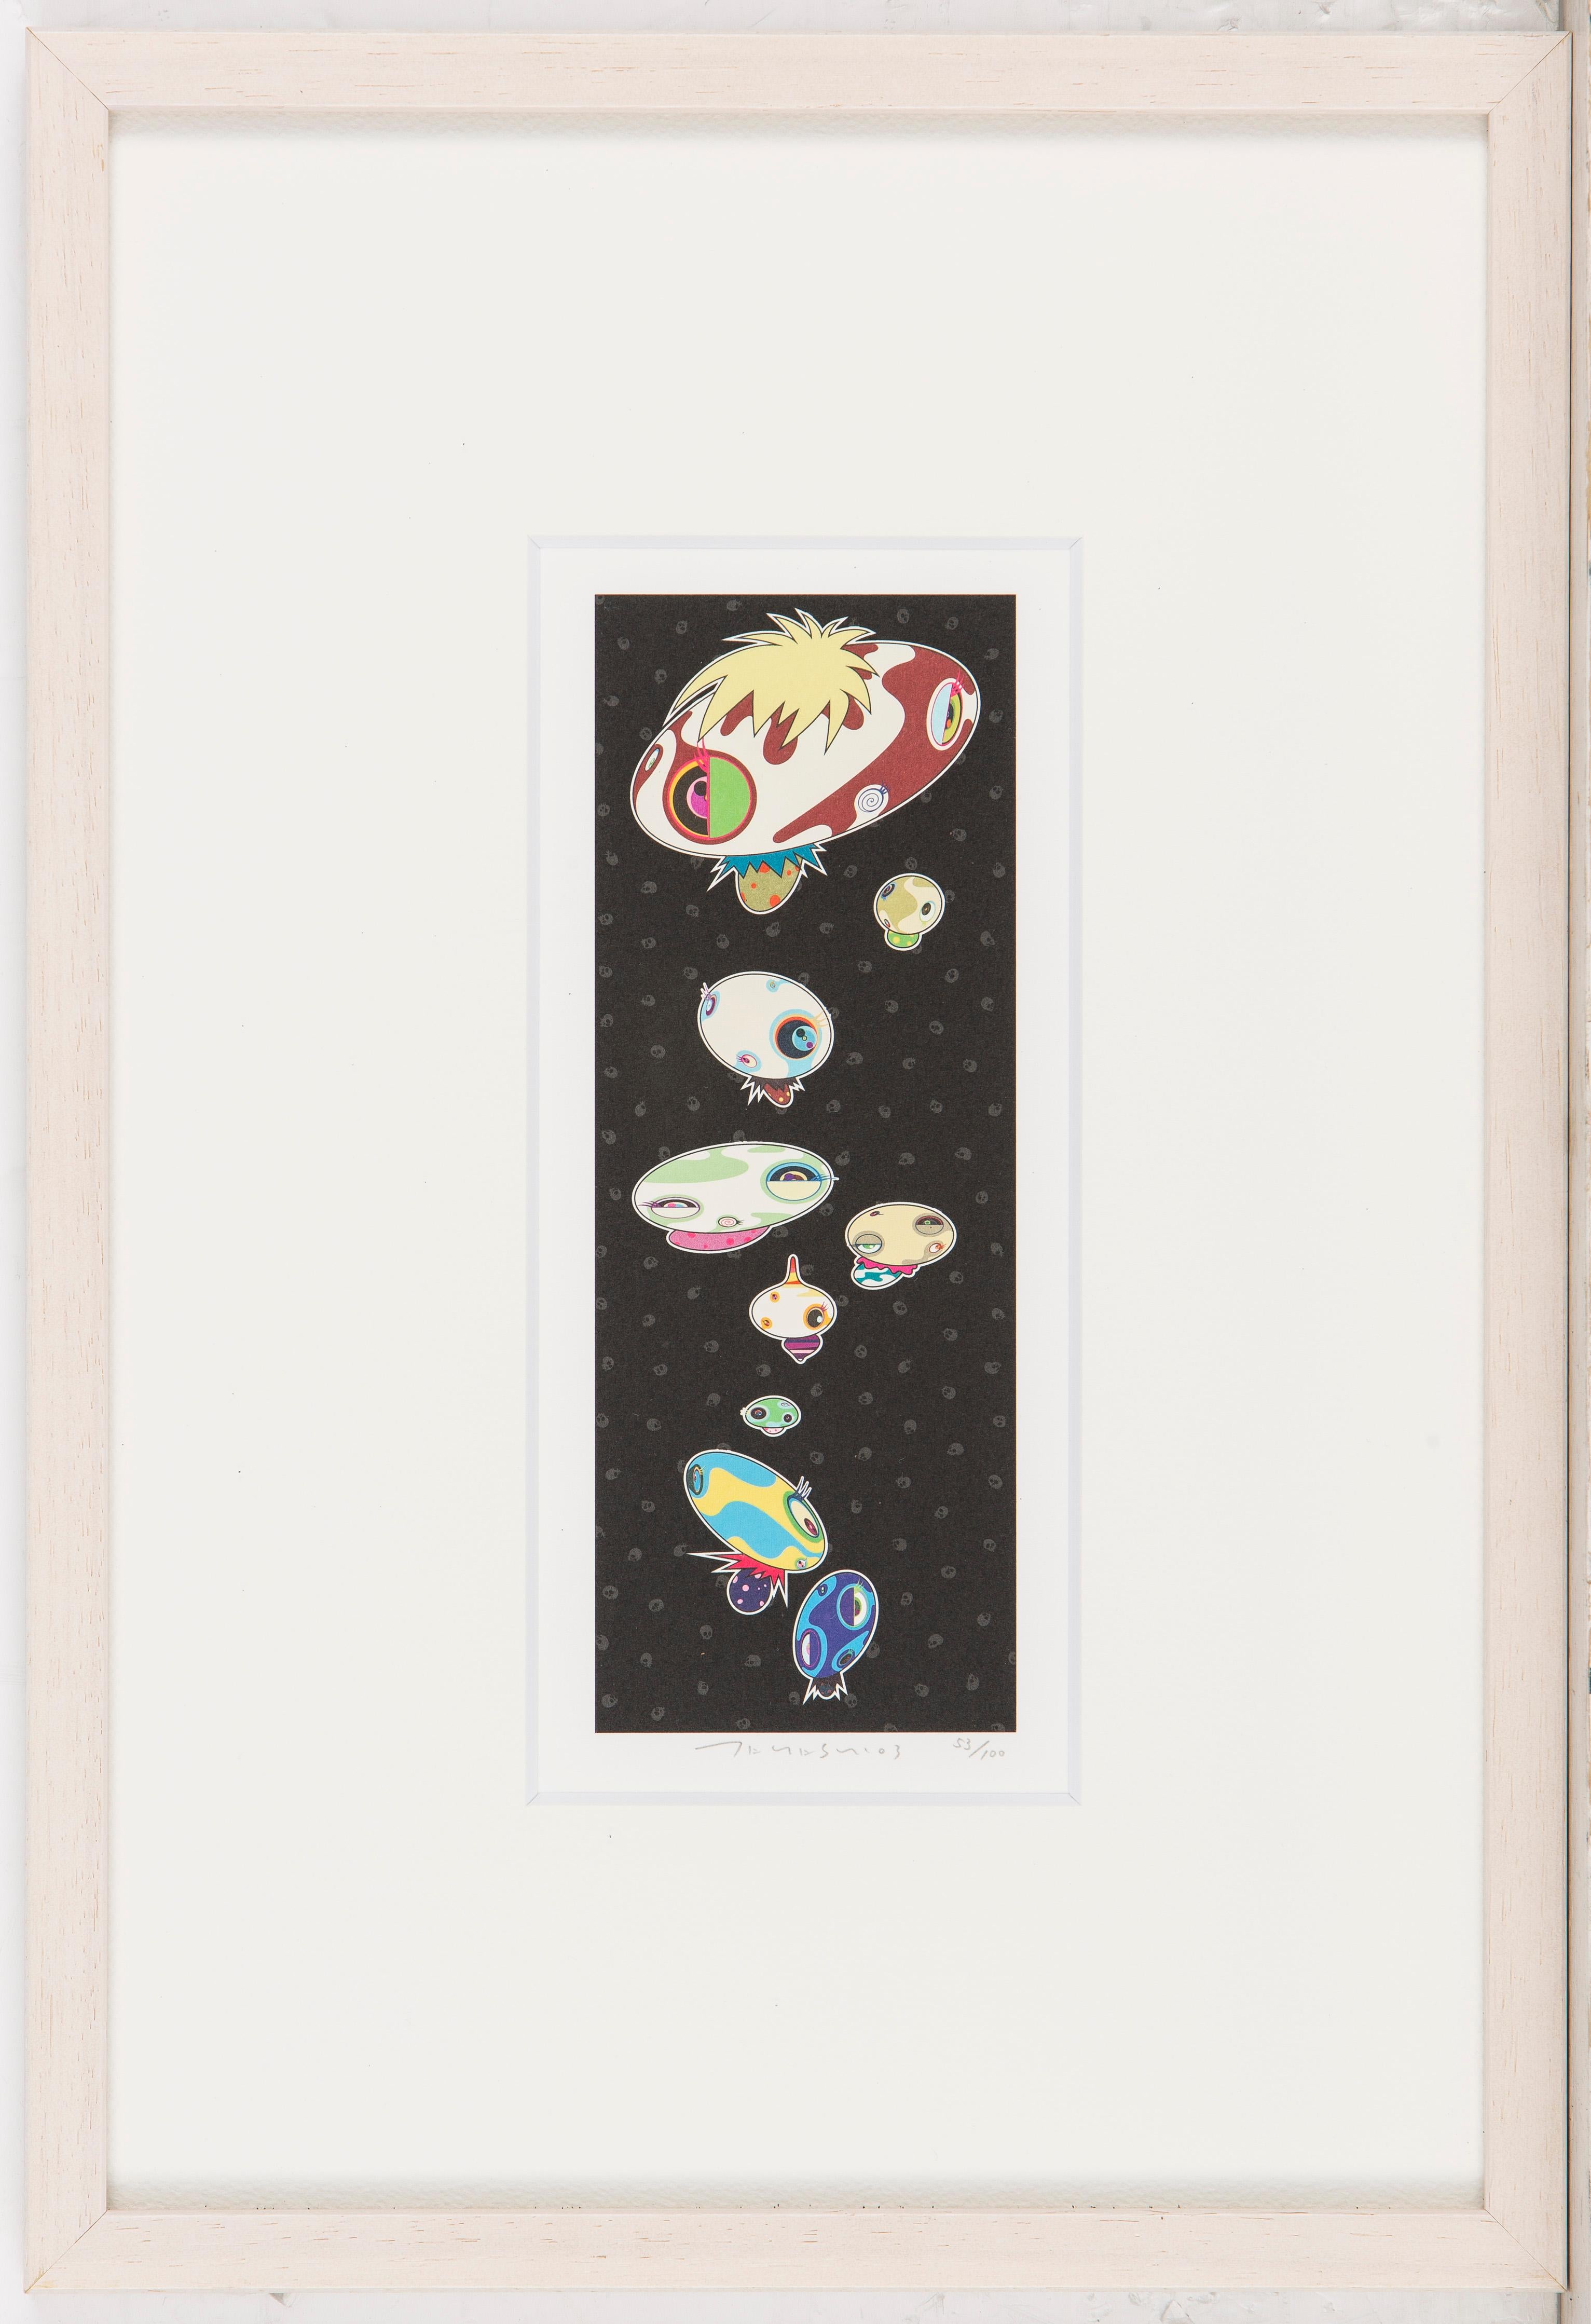 Mushroomers Limited Edition (print) by Murakami, signed and numbered - Print by Takashi Murakami